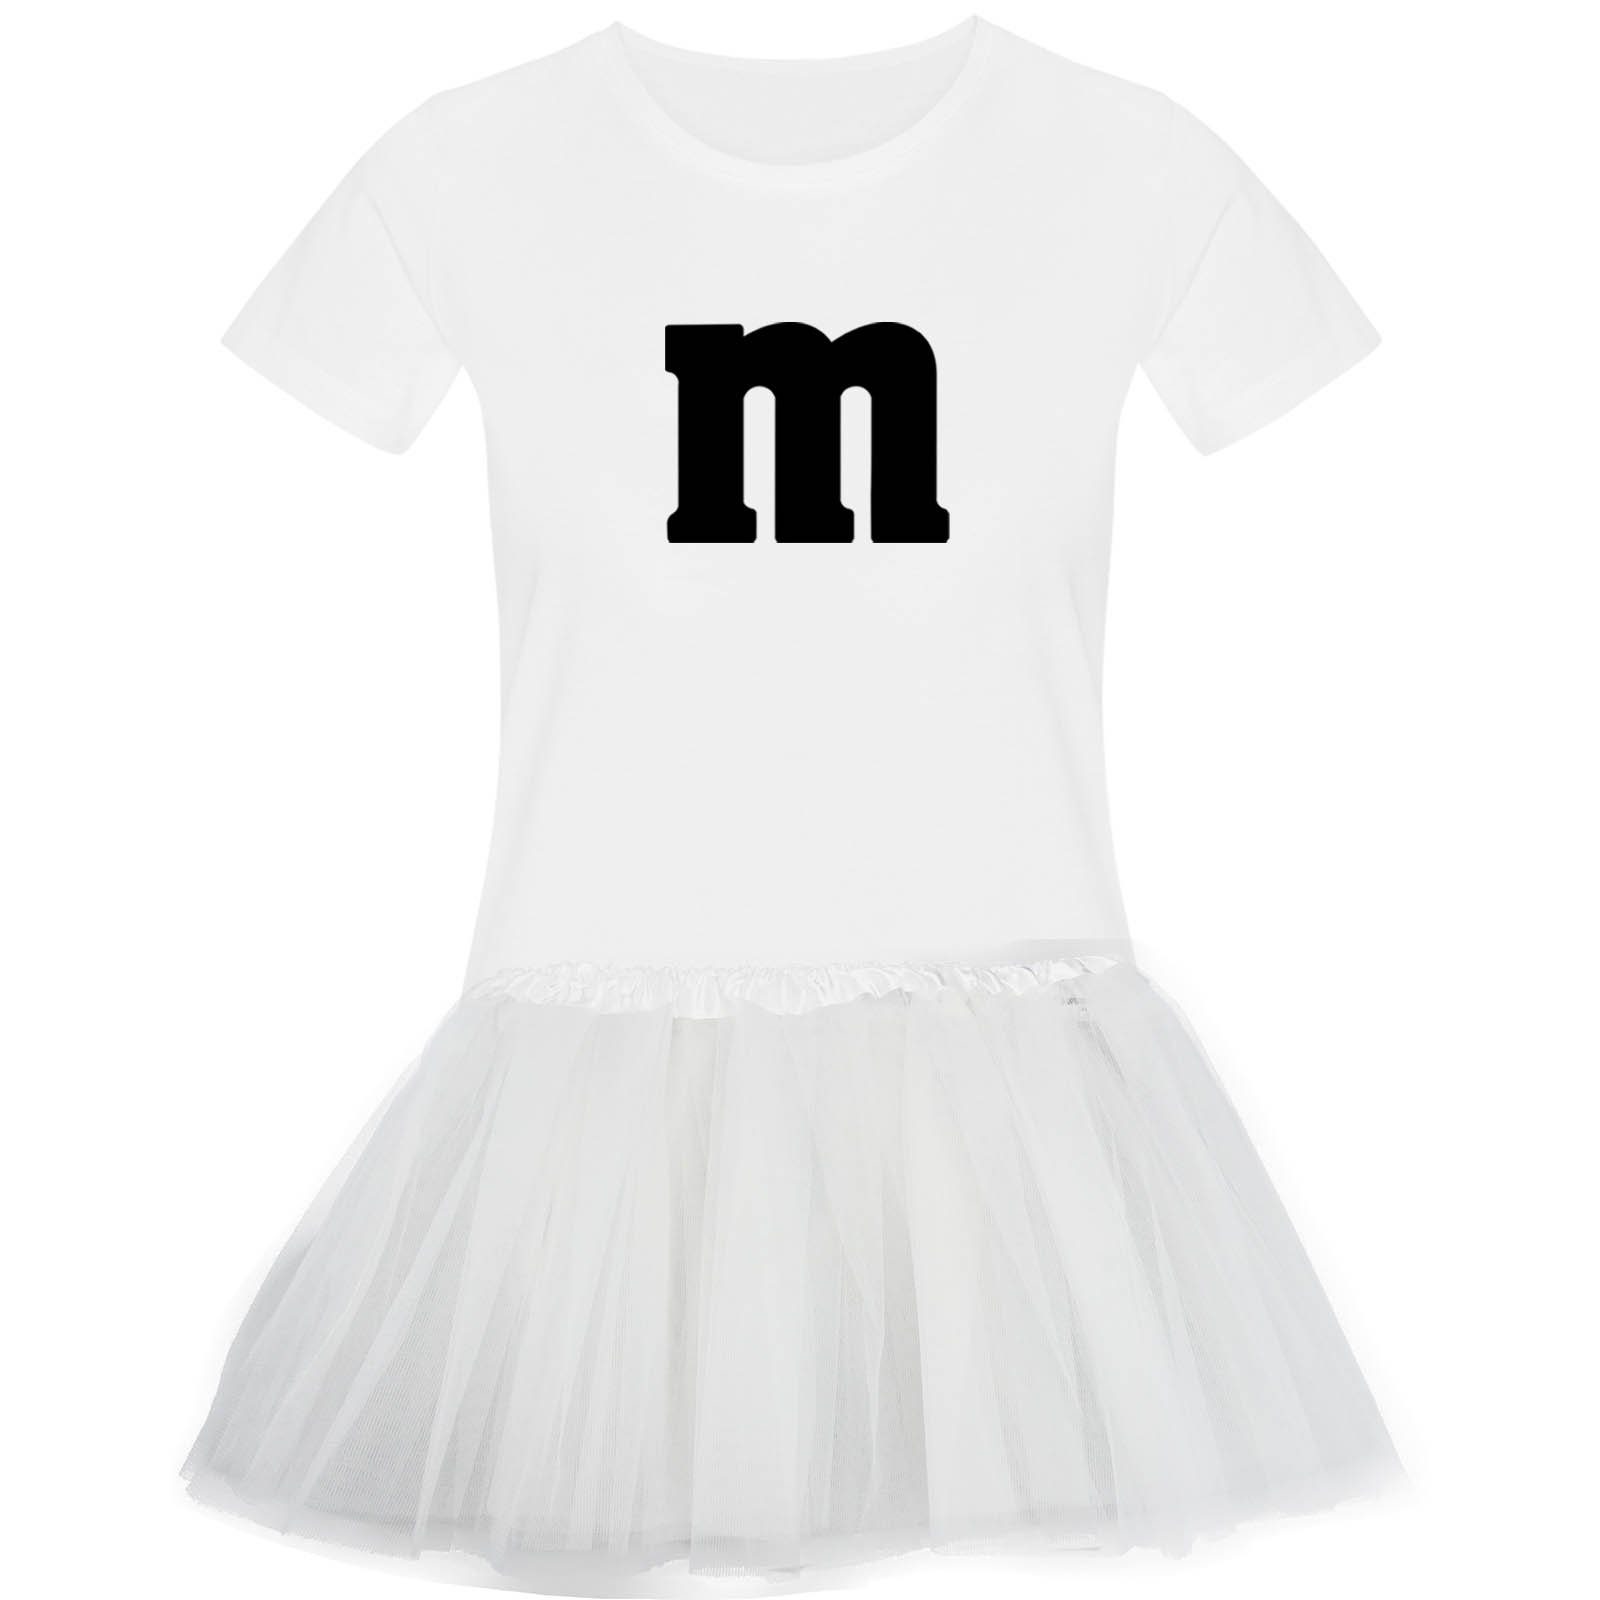 Jimmys Textilfactory Kostüm T-Shirt M&M + Tüllrock Karneval Gruppenkostüm Tütü 11 Farben XS-3XL, T-Shirt & Tütü